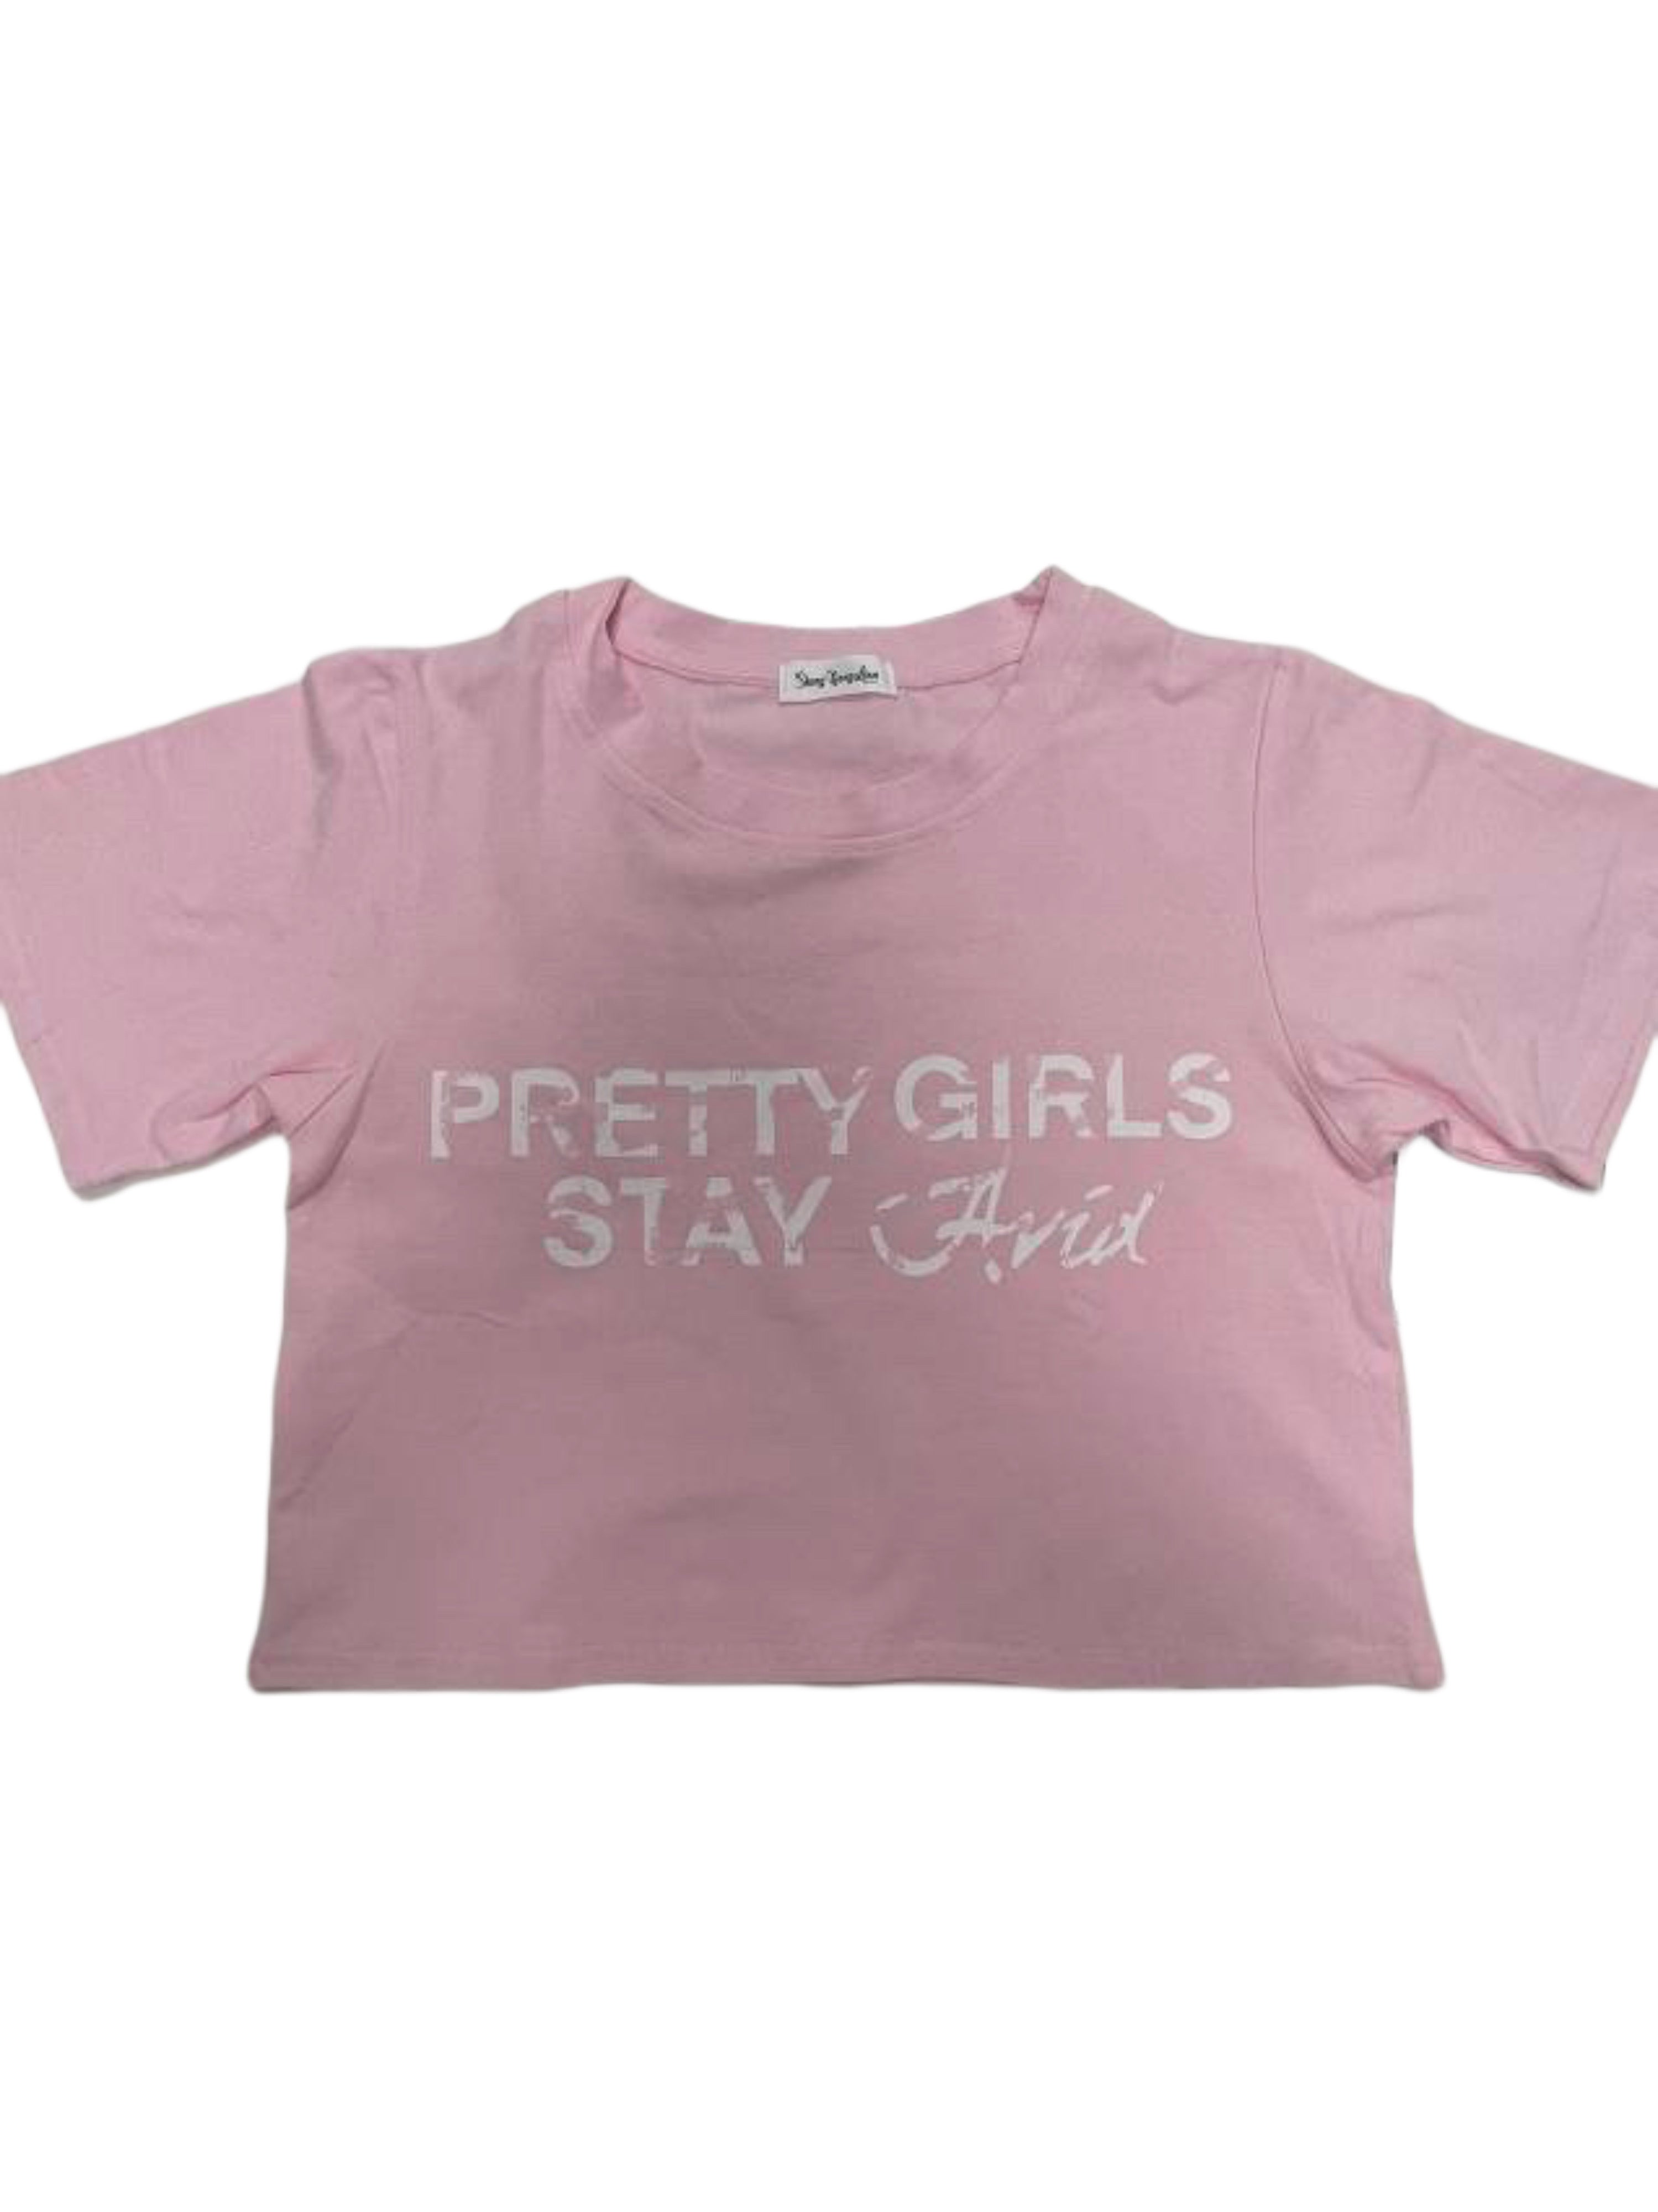 “Pretty Girls Stay Avid” Tee